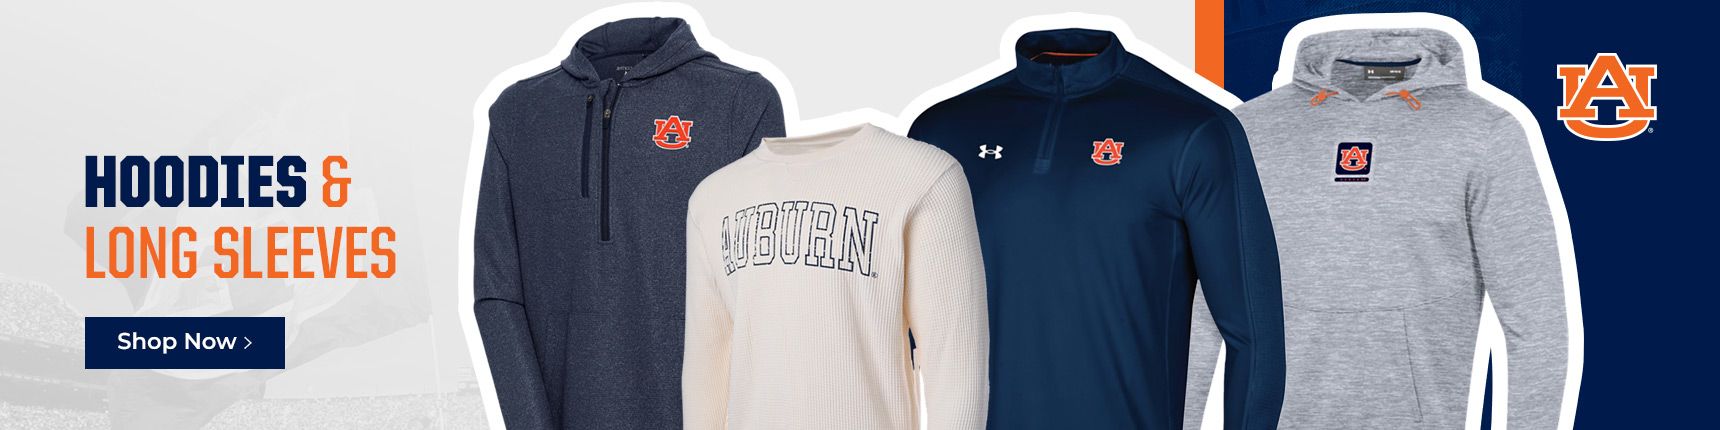 Official Team Shop of Auburn Tigers Athletics Apparel, Gear, Merchandise &  Gifts